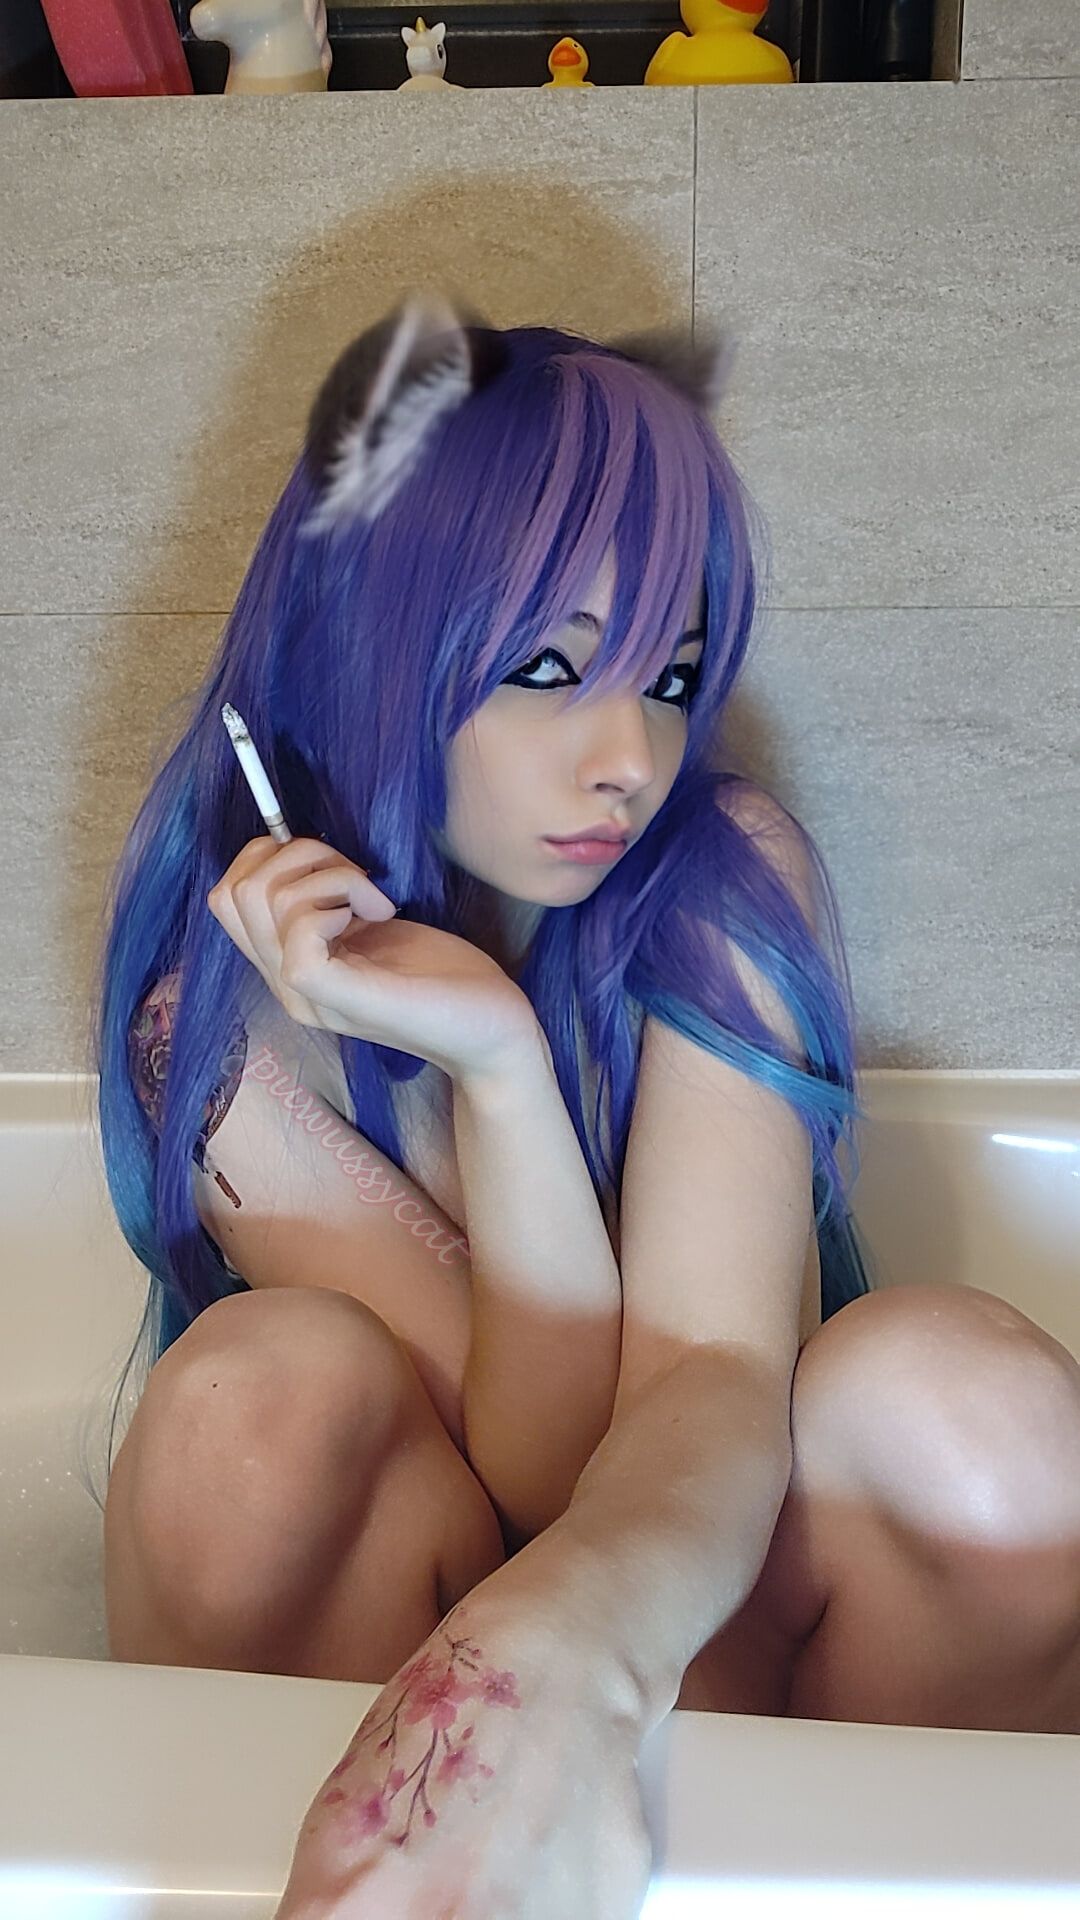 Egirl smoking in bathtub #5